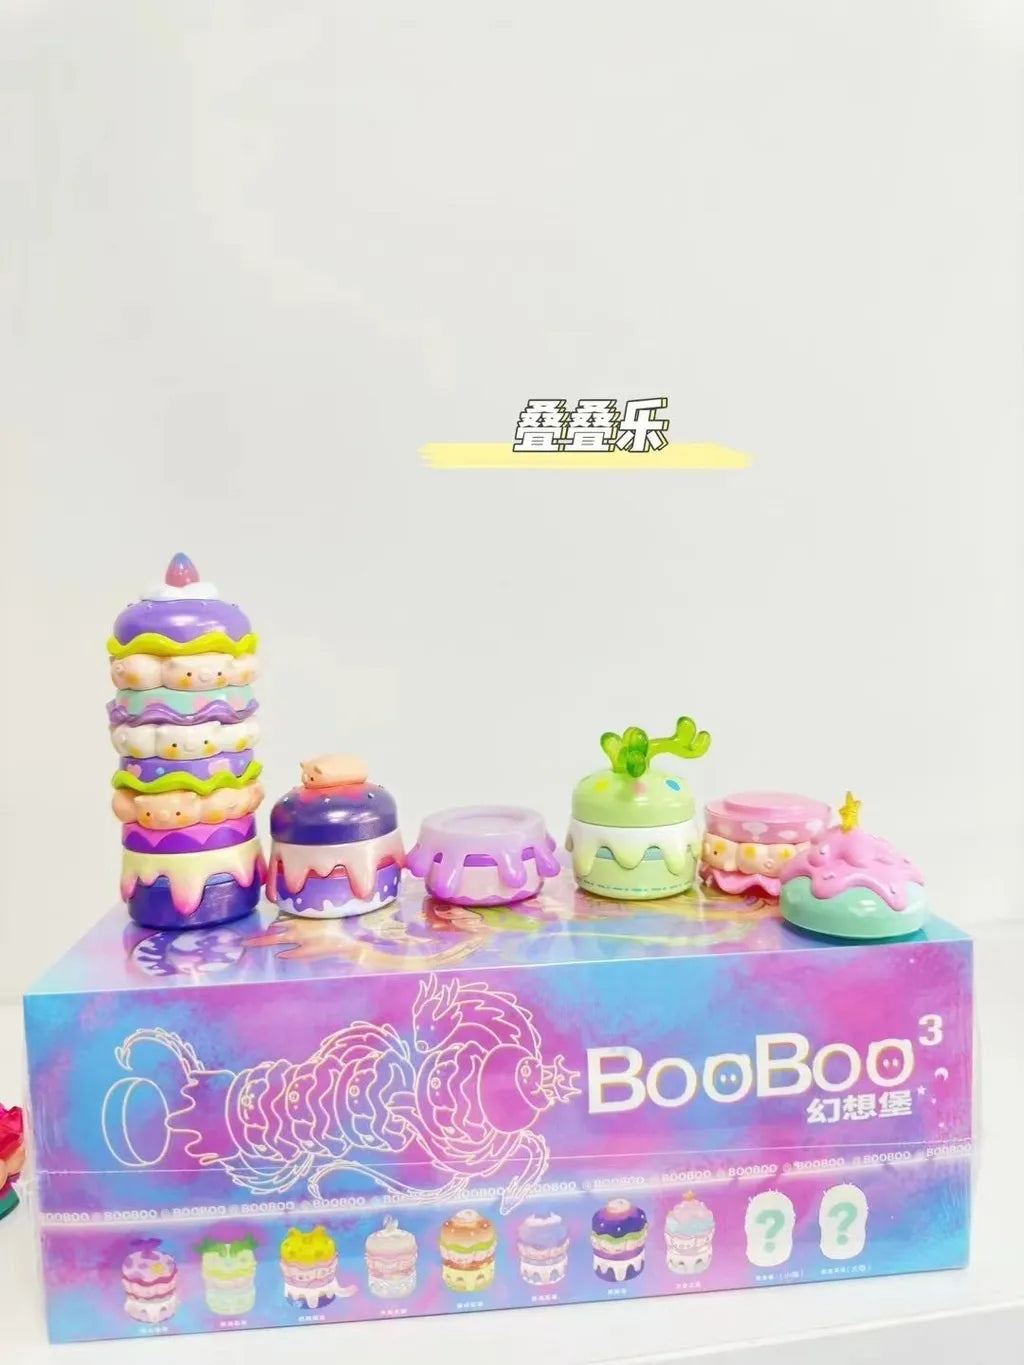 [CHAOSSTAR] BOOBOO - Imagination Burger 3 SERIES BLIND BOX